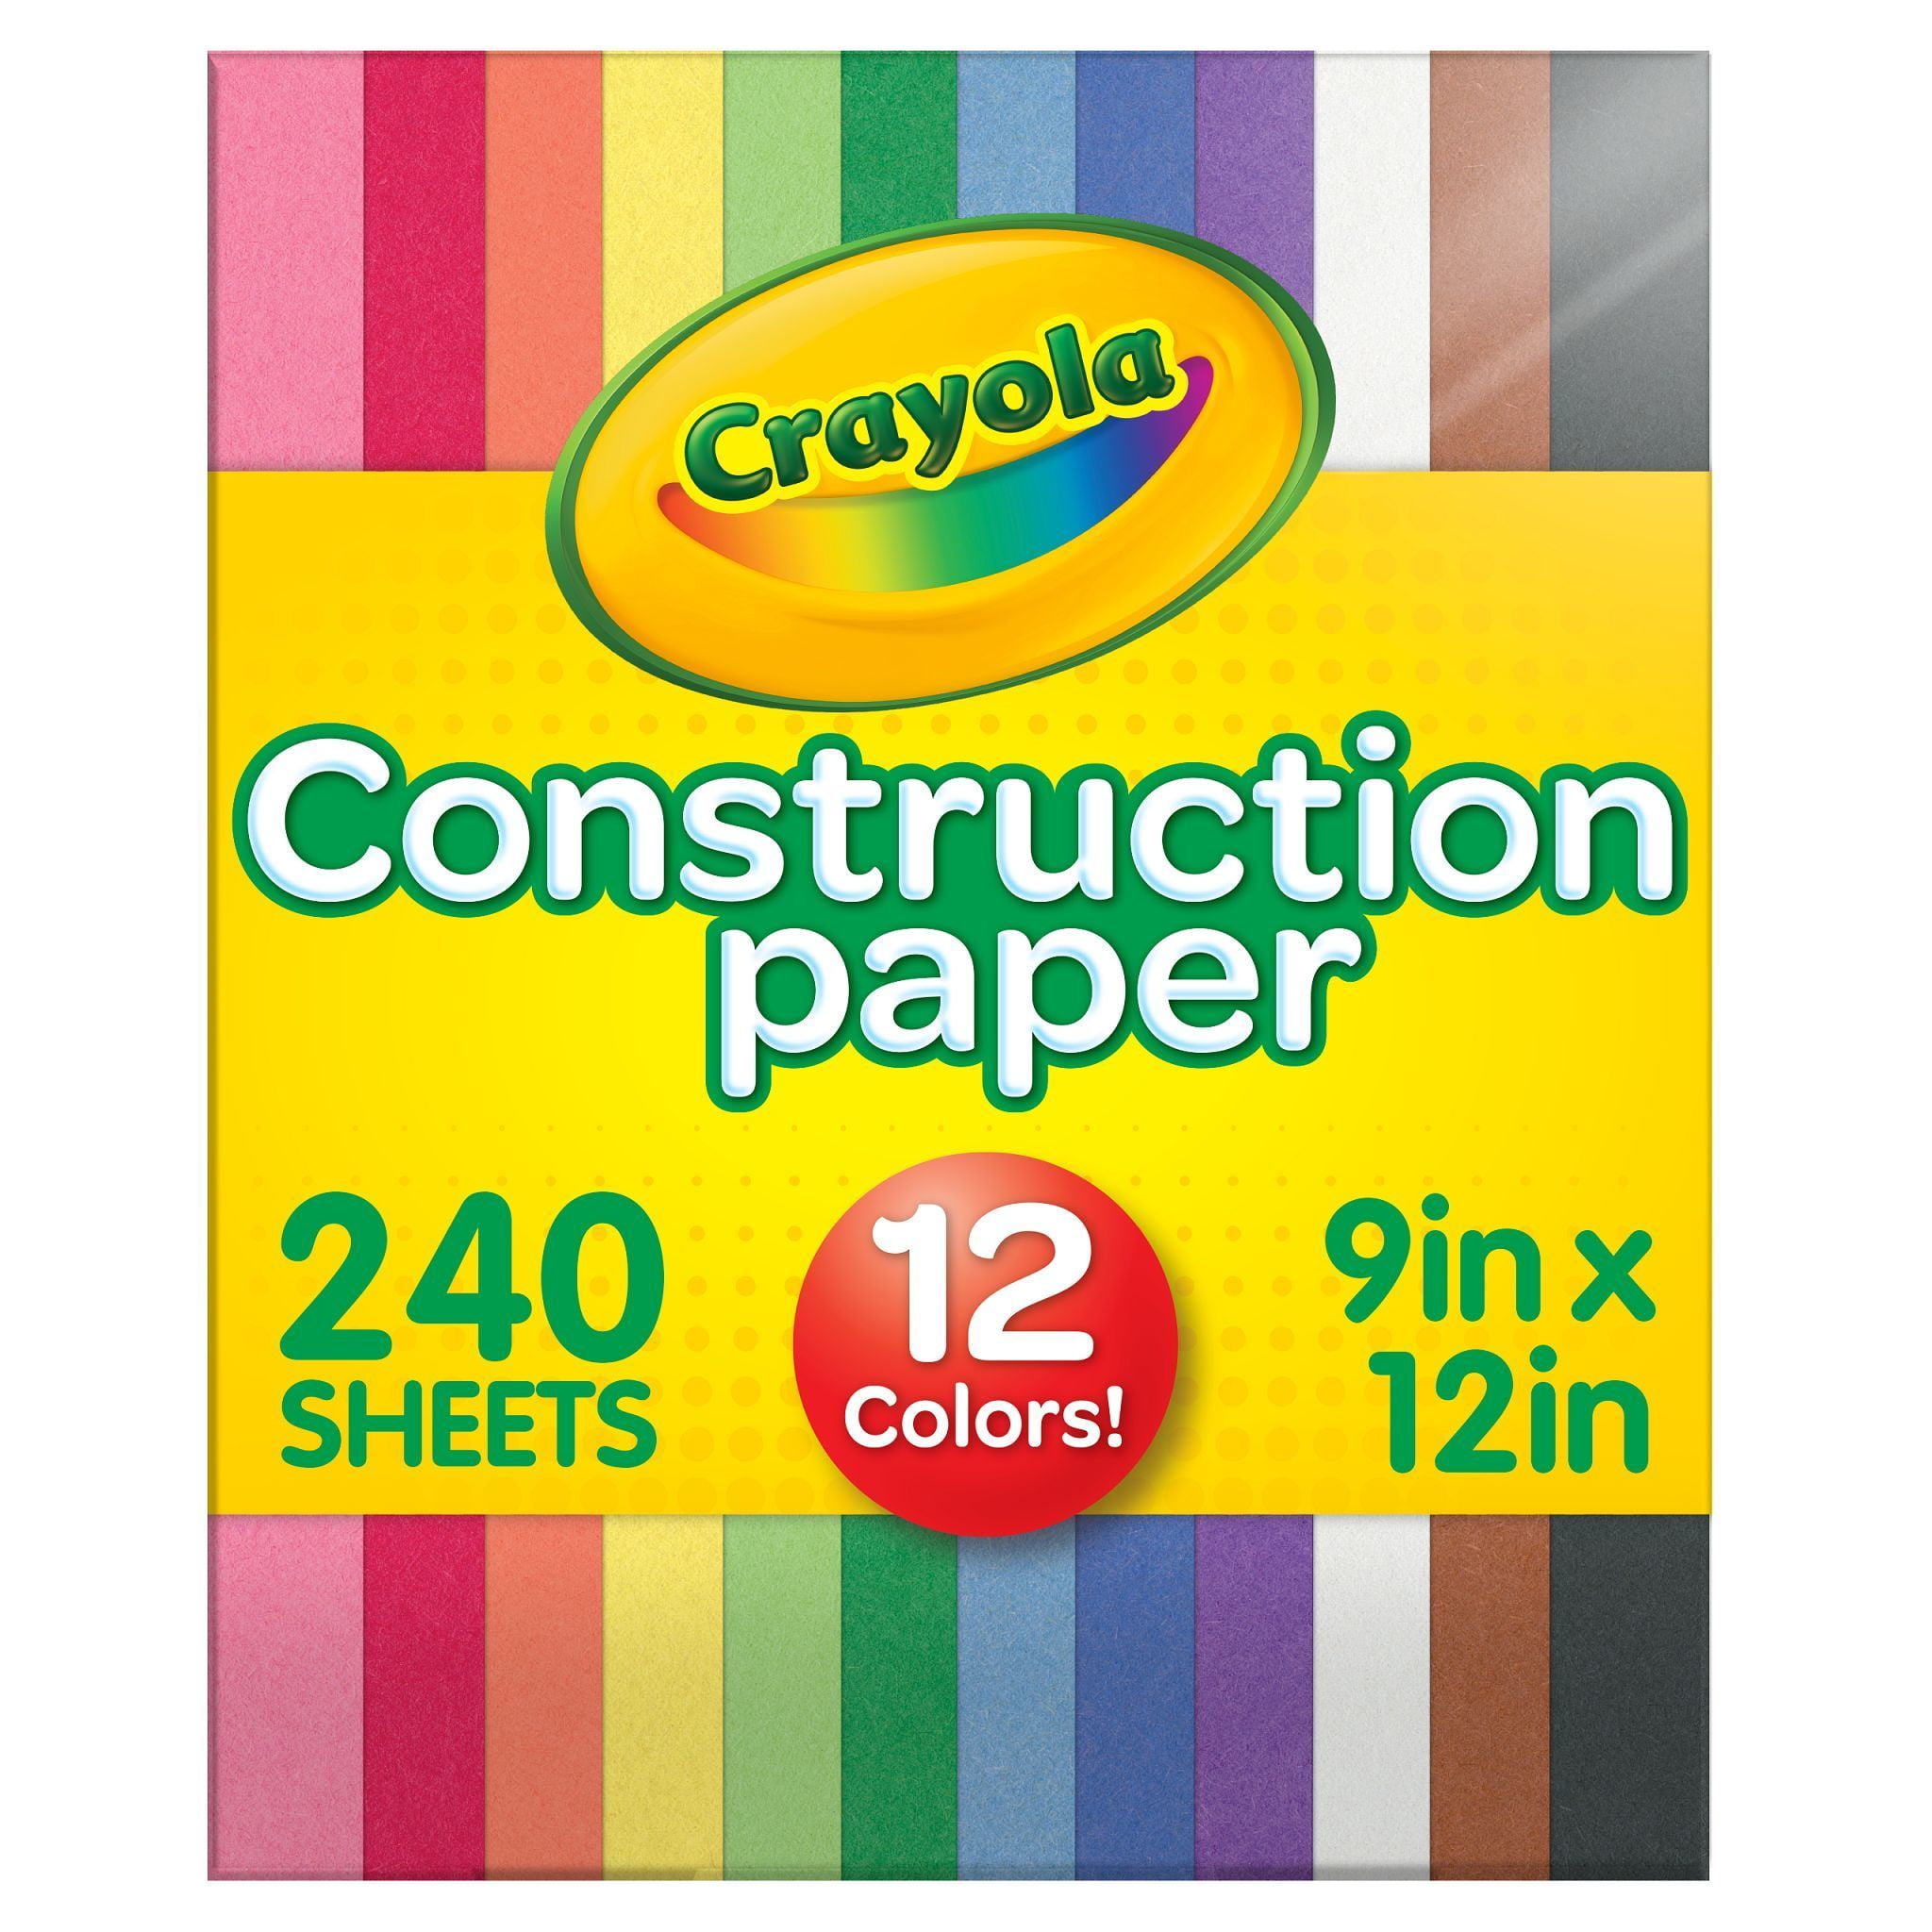 Construction Paper, 5 Assorted Hot Colors, 12 x 18, 50 Sheets